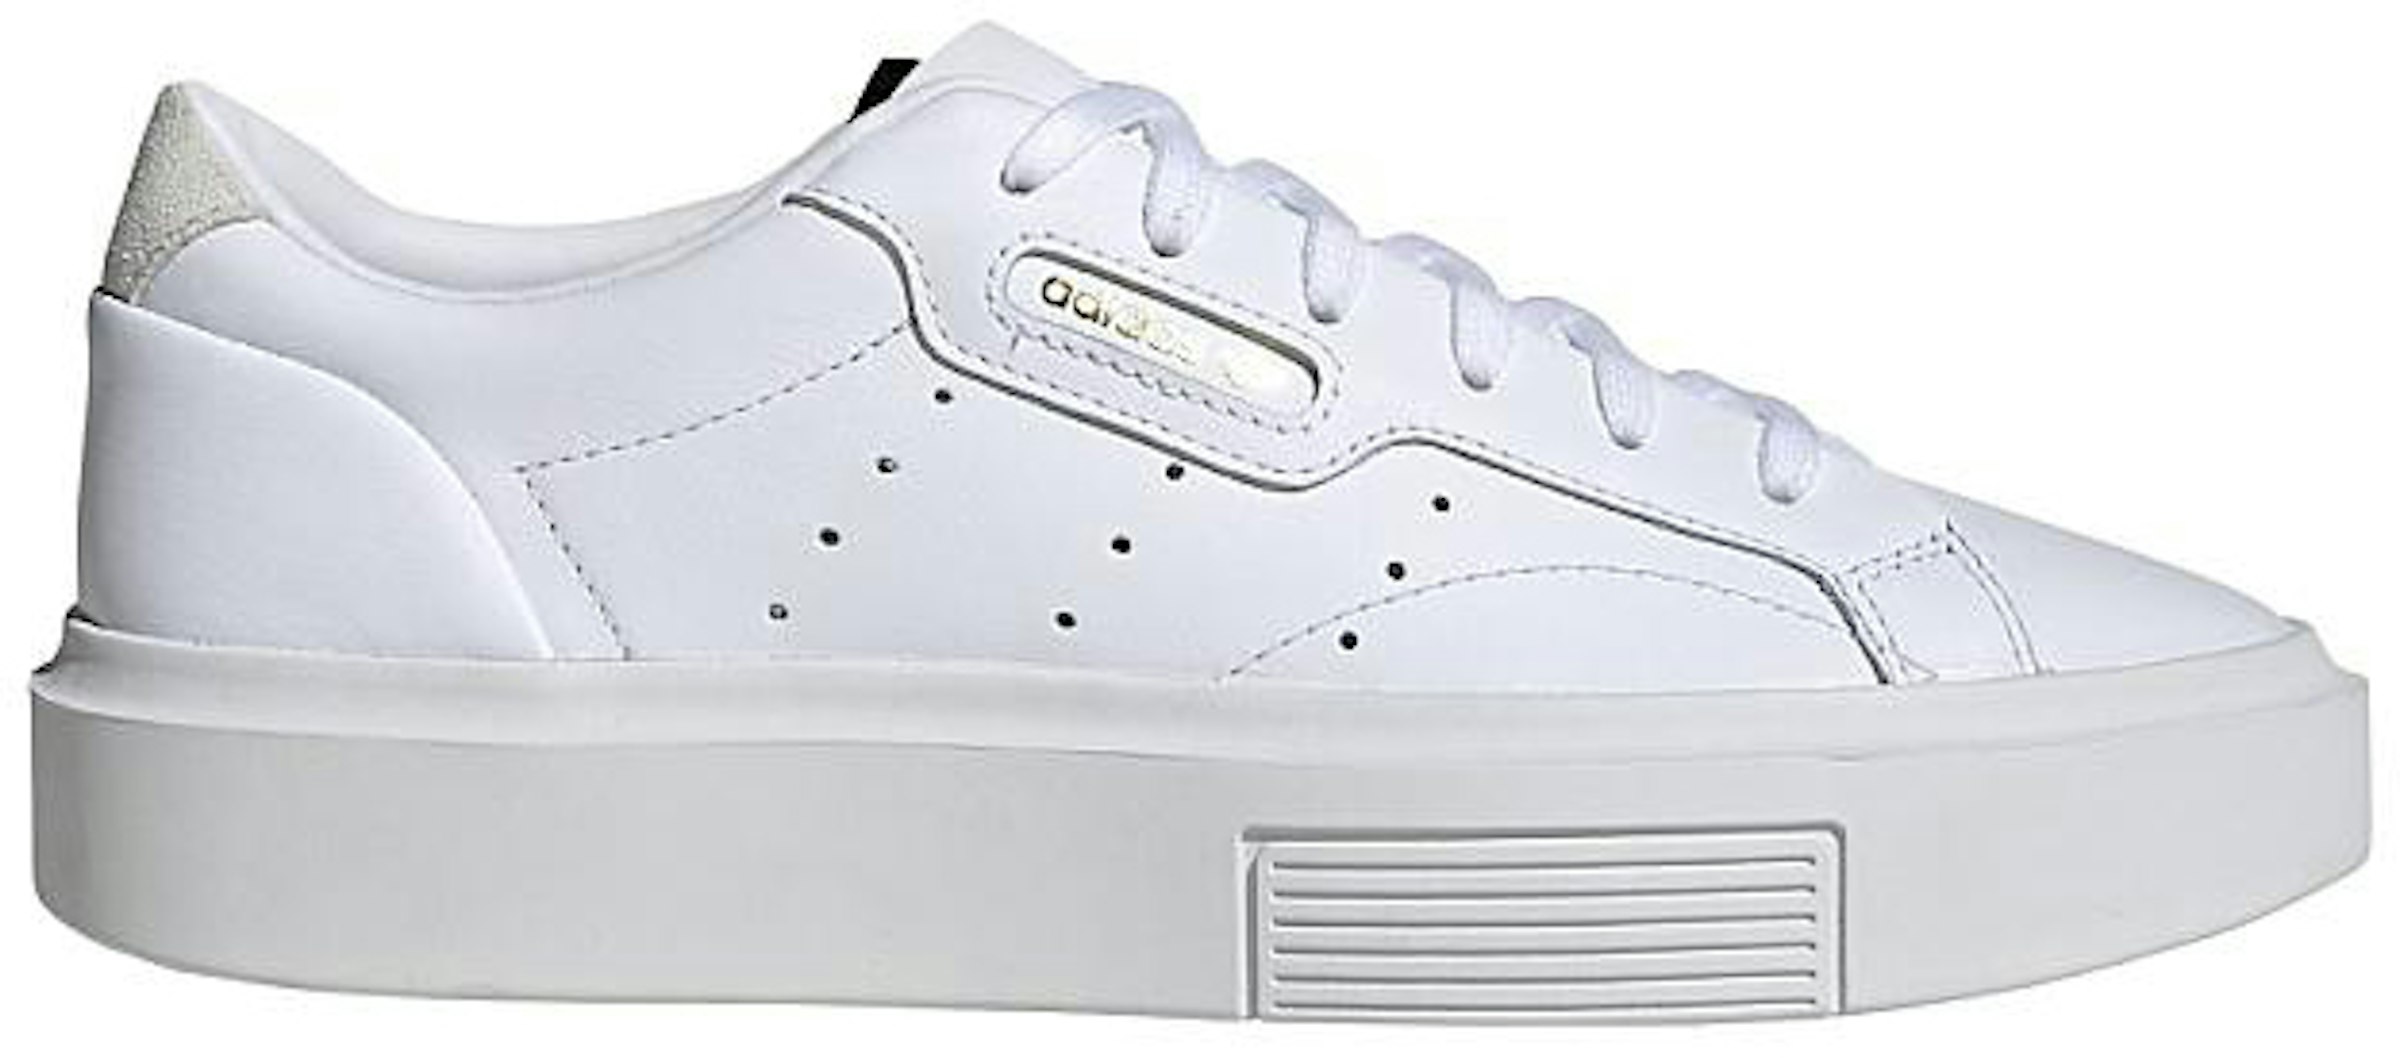 stad Passend apotheek adidas Super Sleek Footwear White (Women's) - EF8858 - US